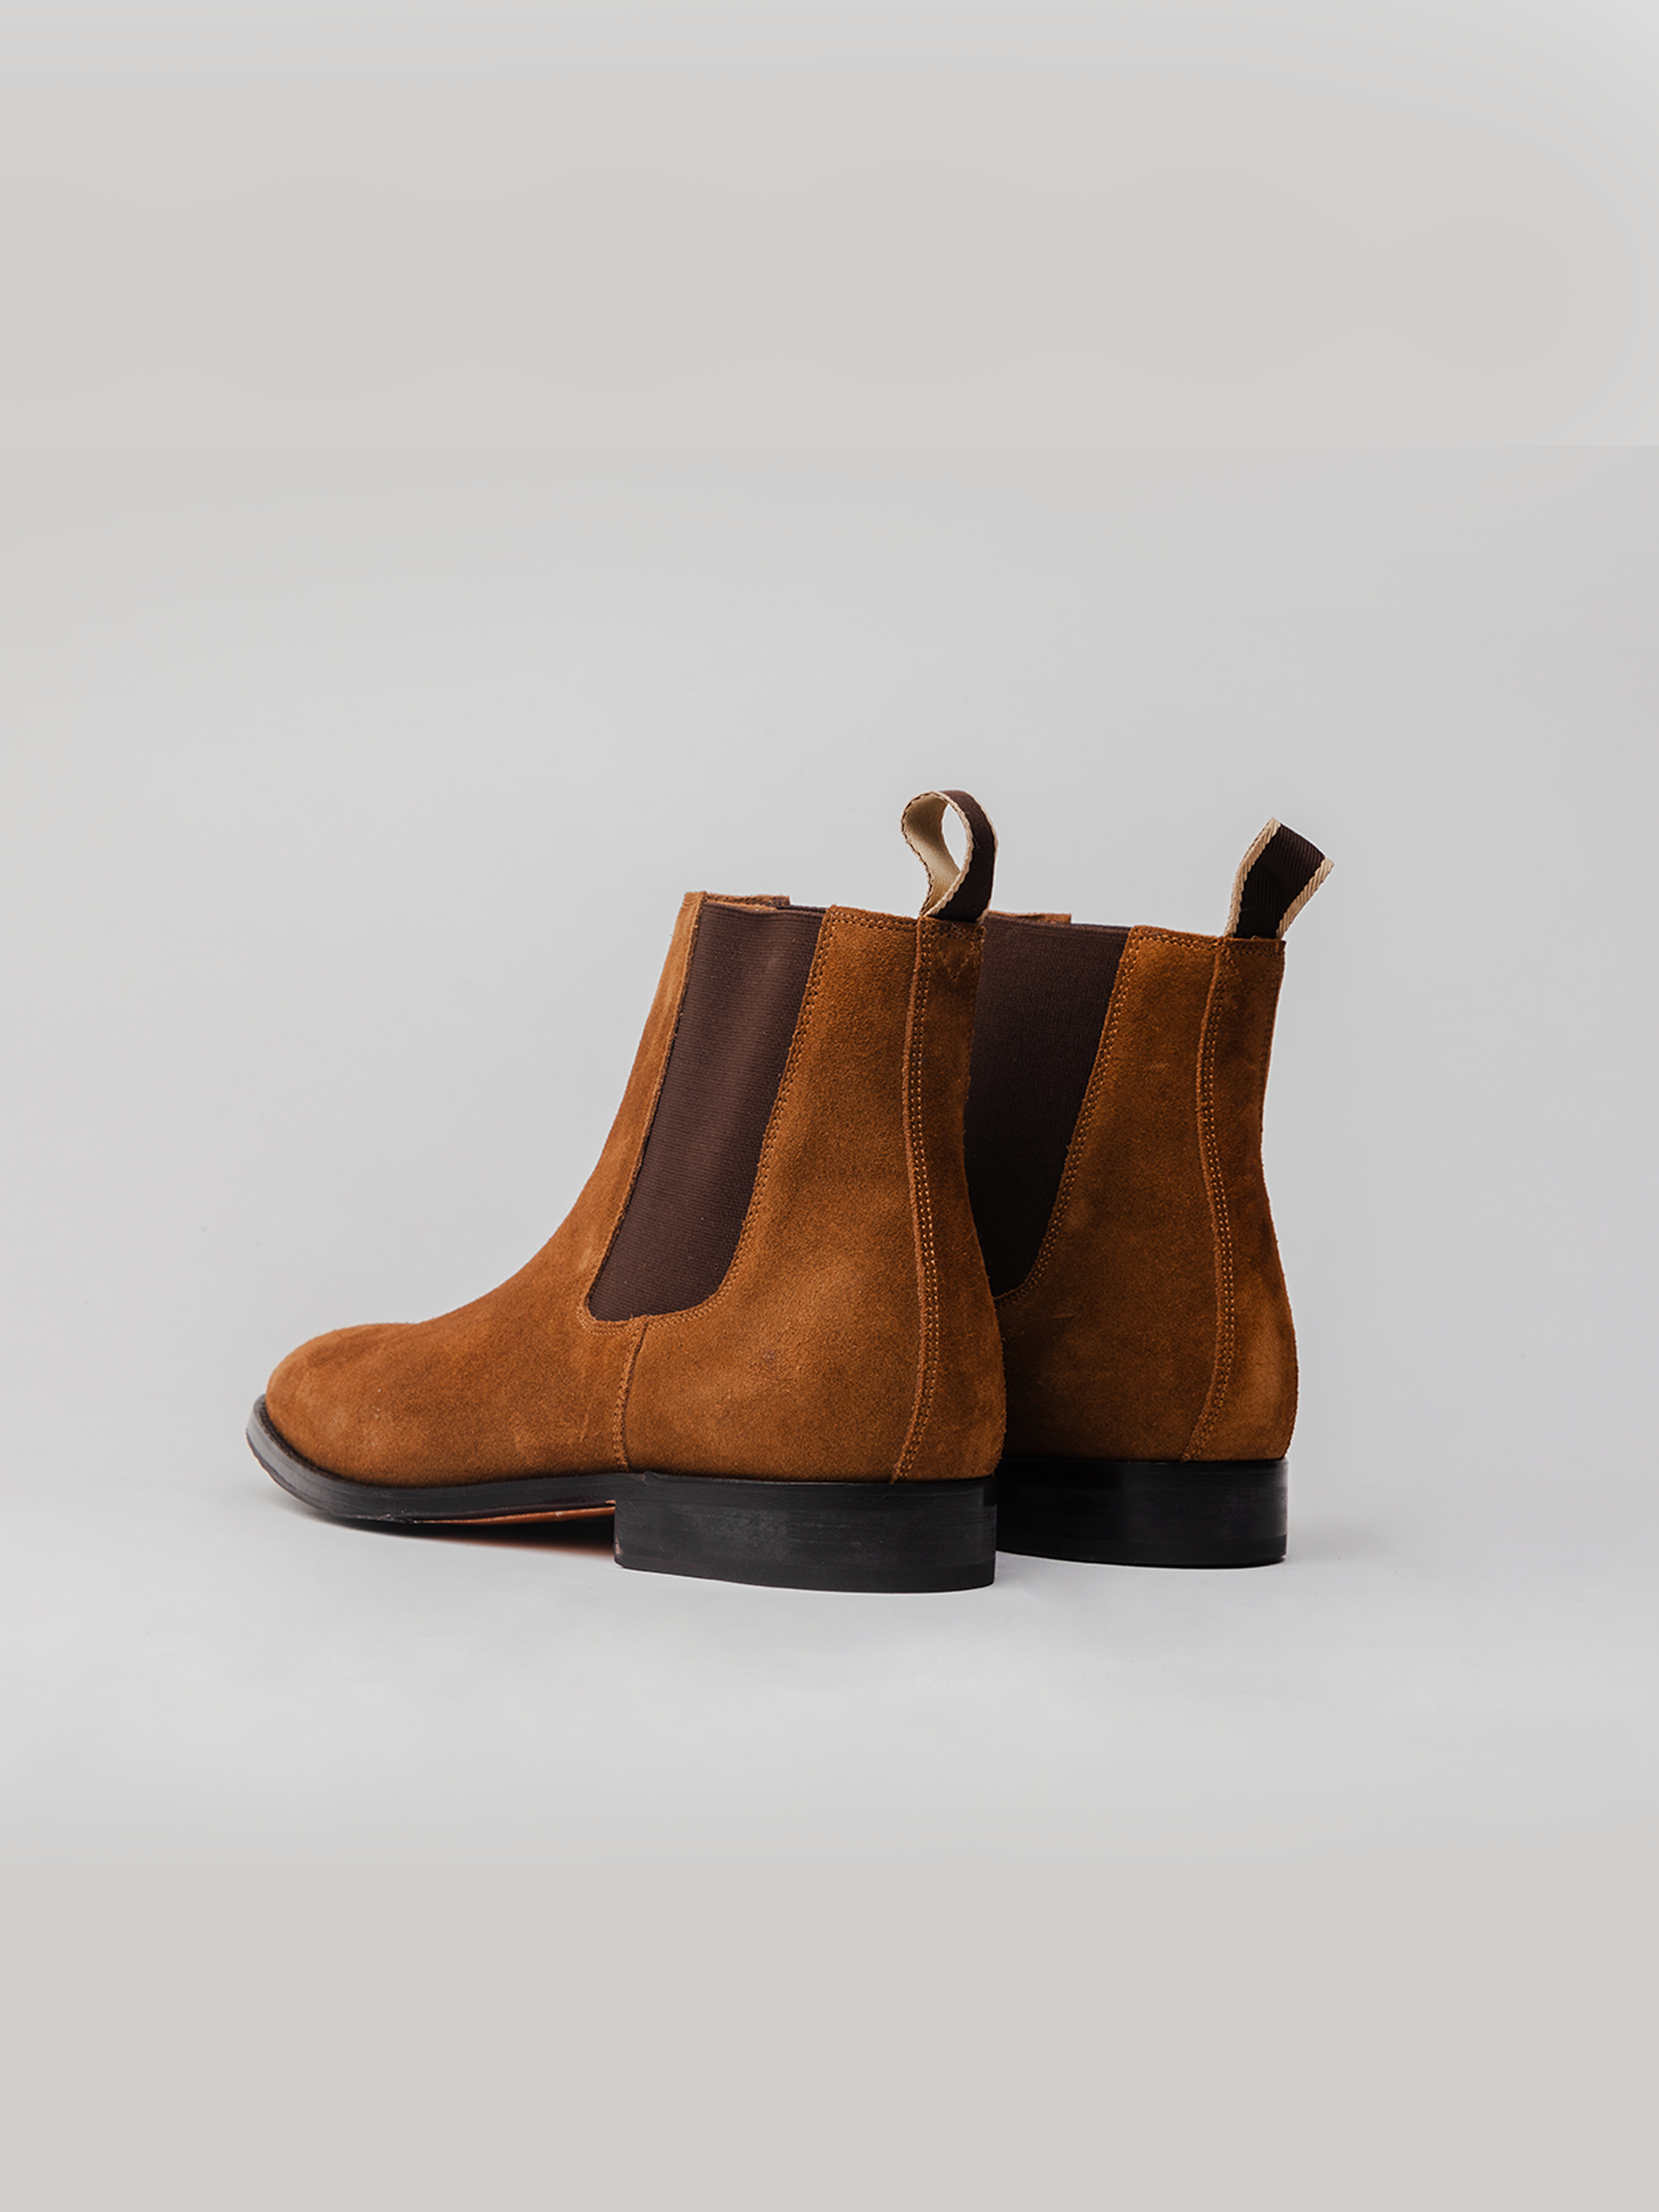 Buy Designer Shoes Online | Suede Leather | Rawls